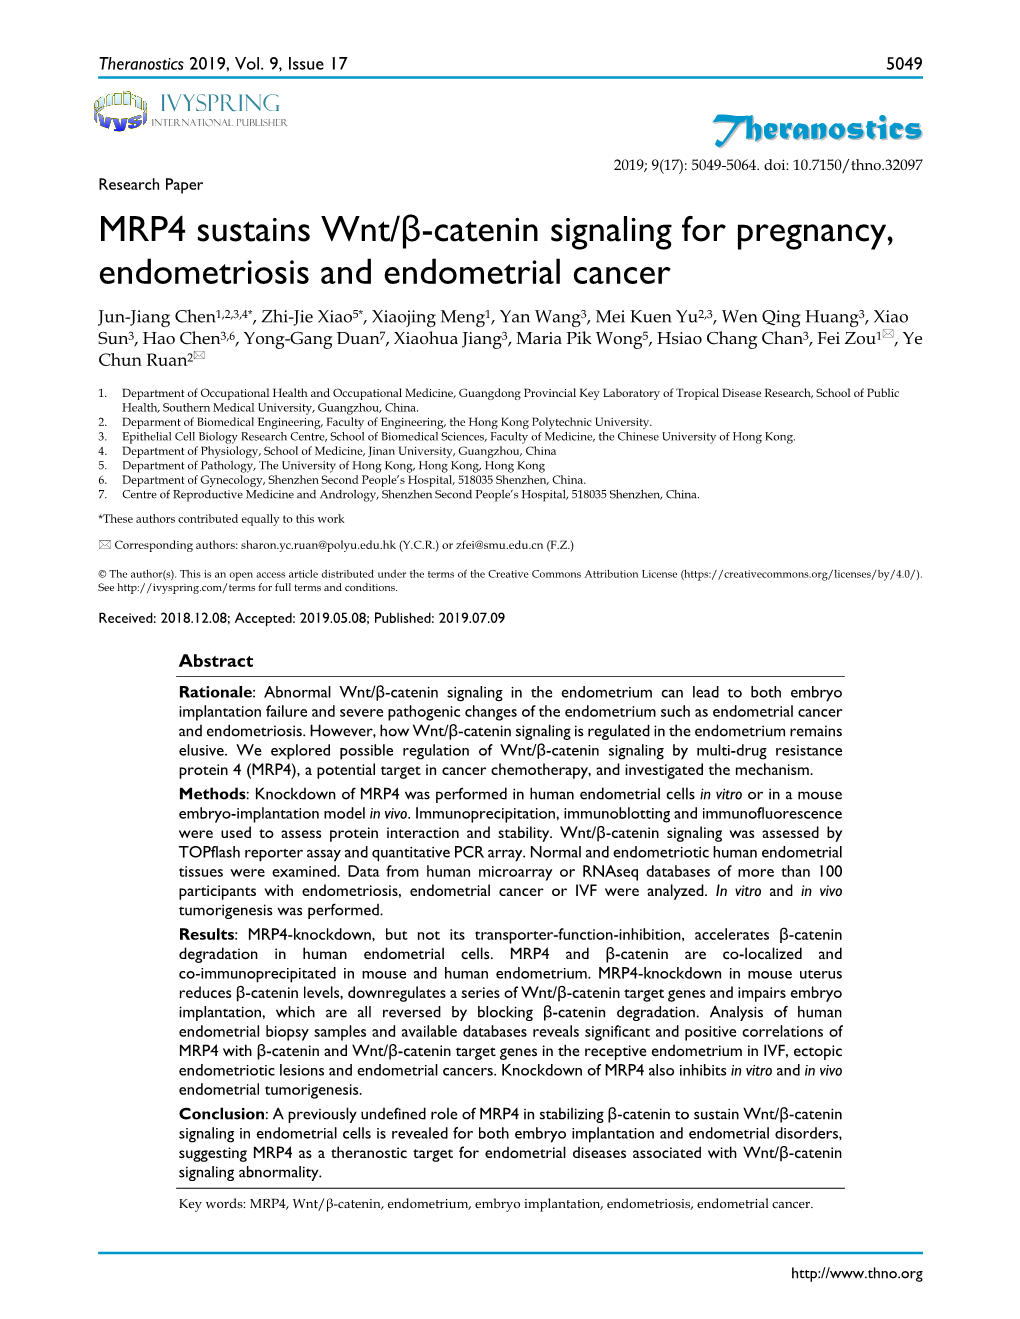 Theranostics MRP4 Sustains Wnt/Β-Catenin Signaling for Pregnancy